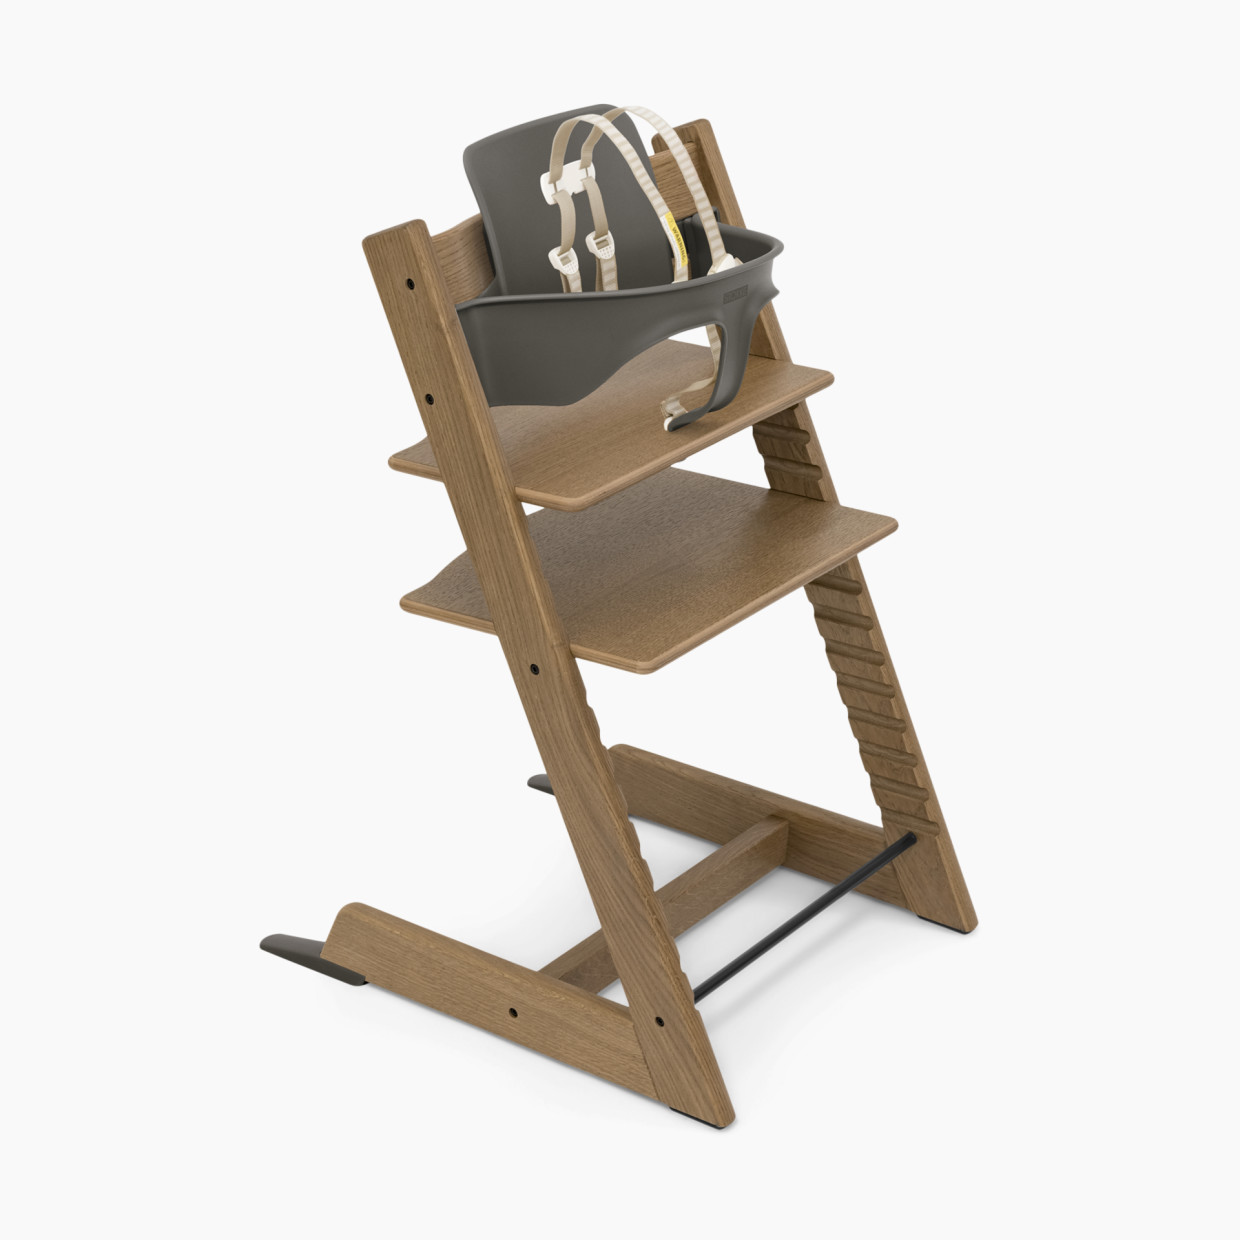 Stokke Tripp Trapp High Chair - Oak Brown.